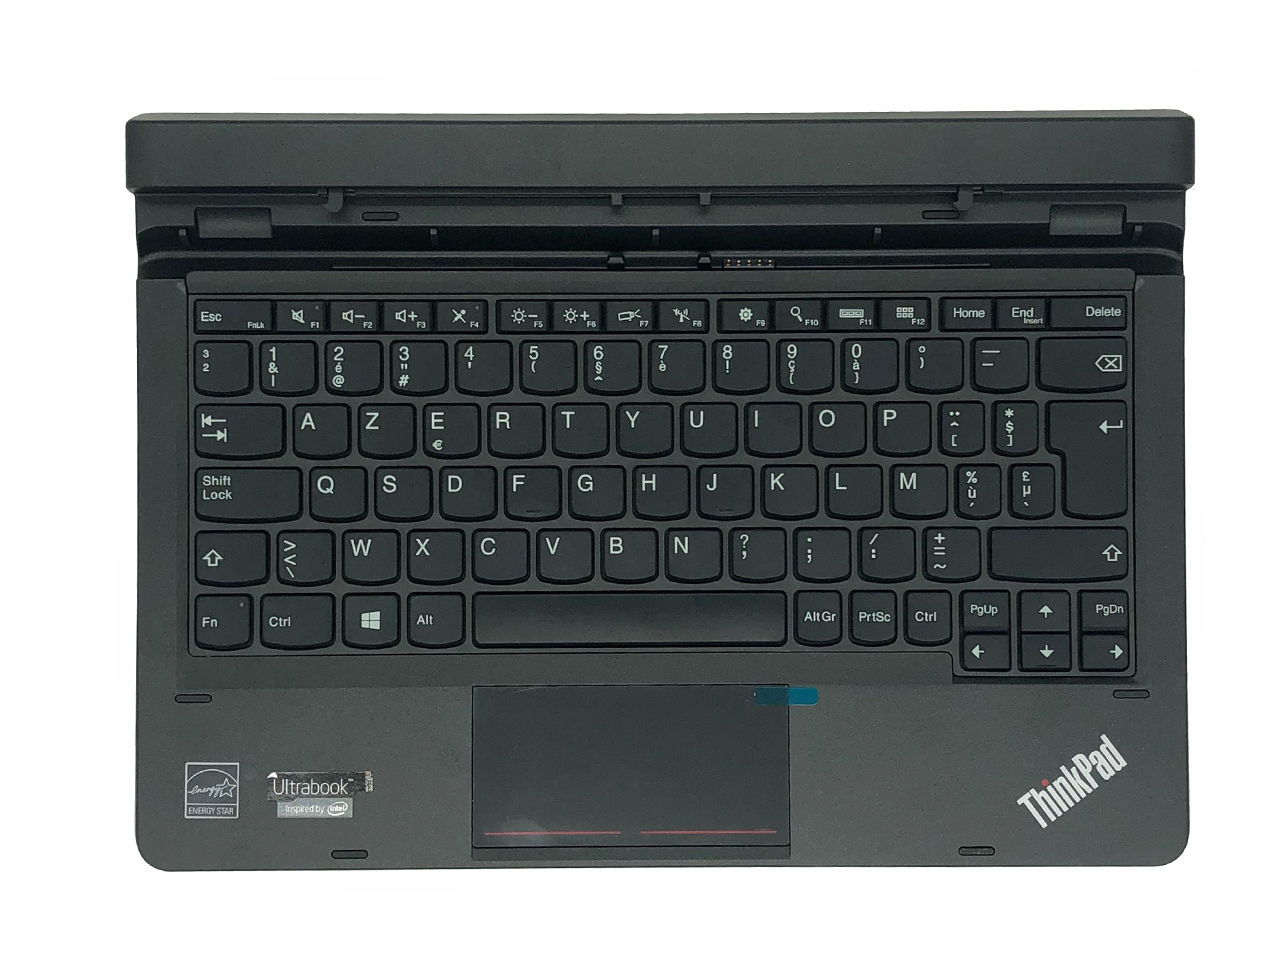 联想 磁吸底座键盘Belgian Base Keyboard for Lenovo Thinkpad Helix 2nd Gen 20CG 20CH Ultrabook 00HW406